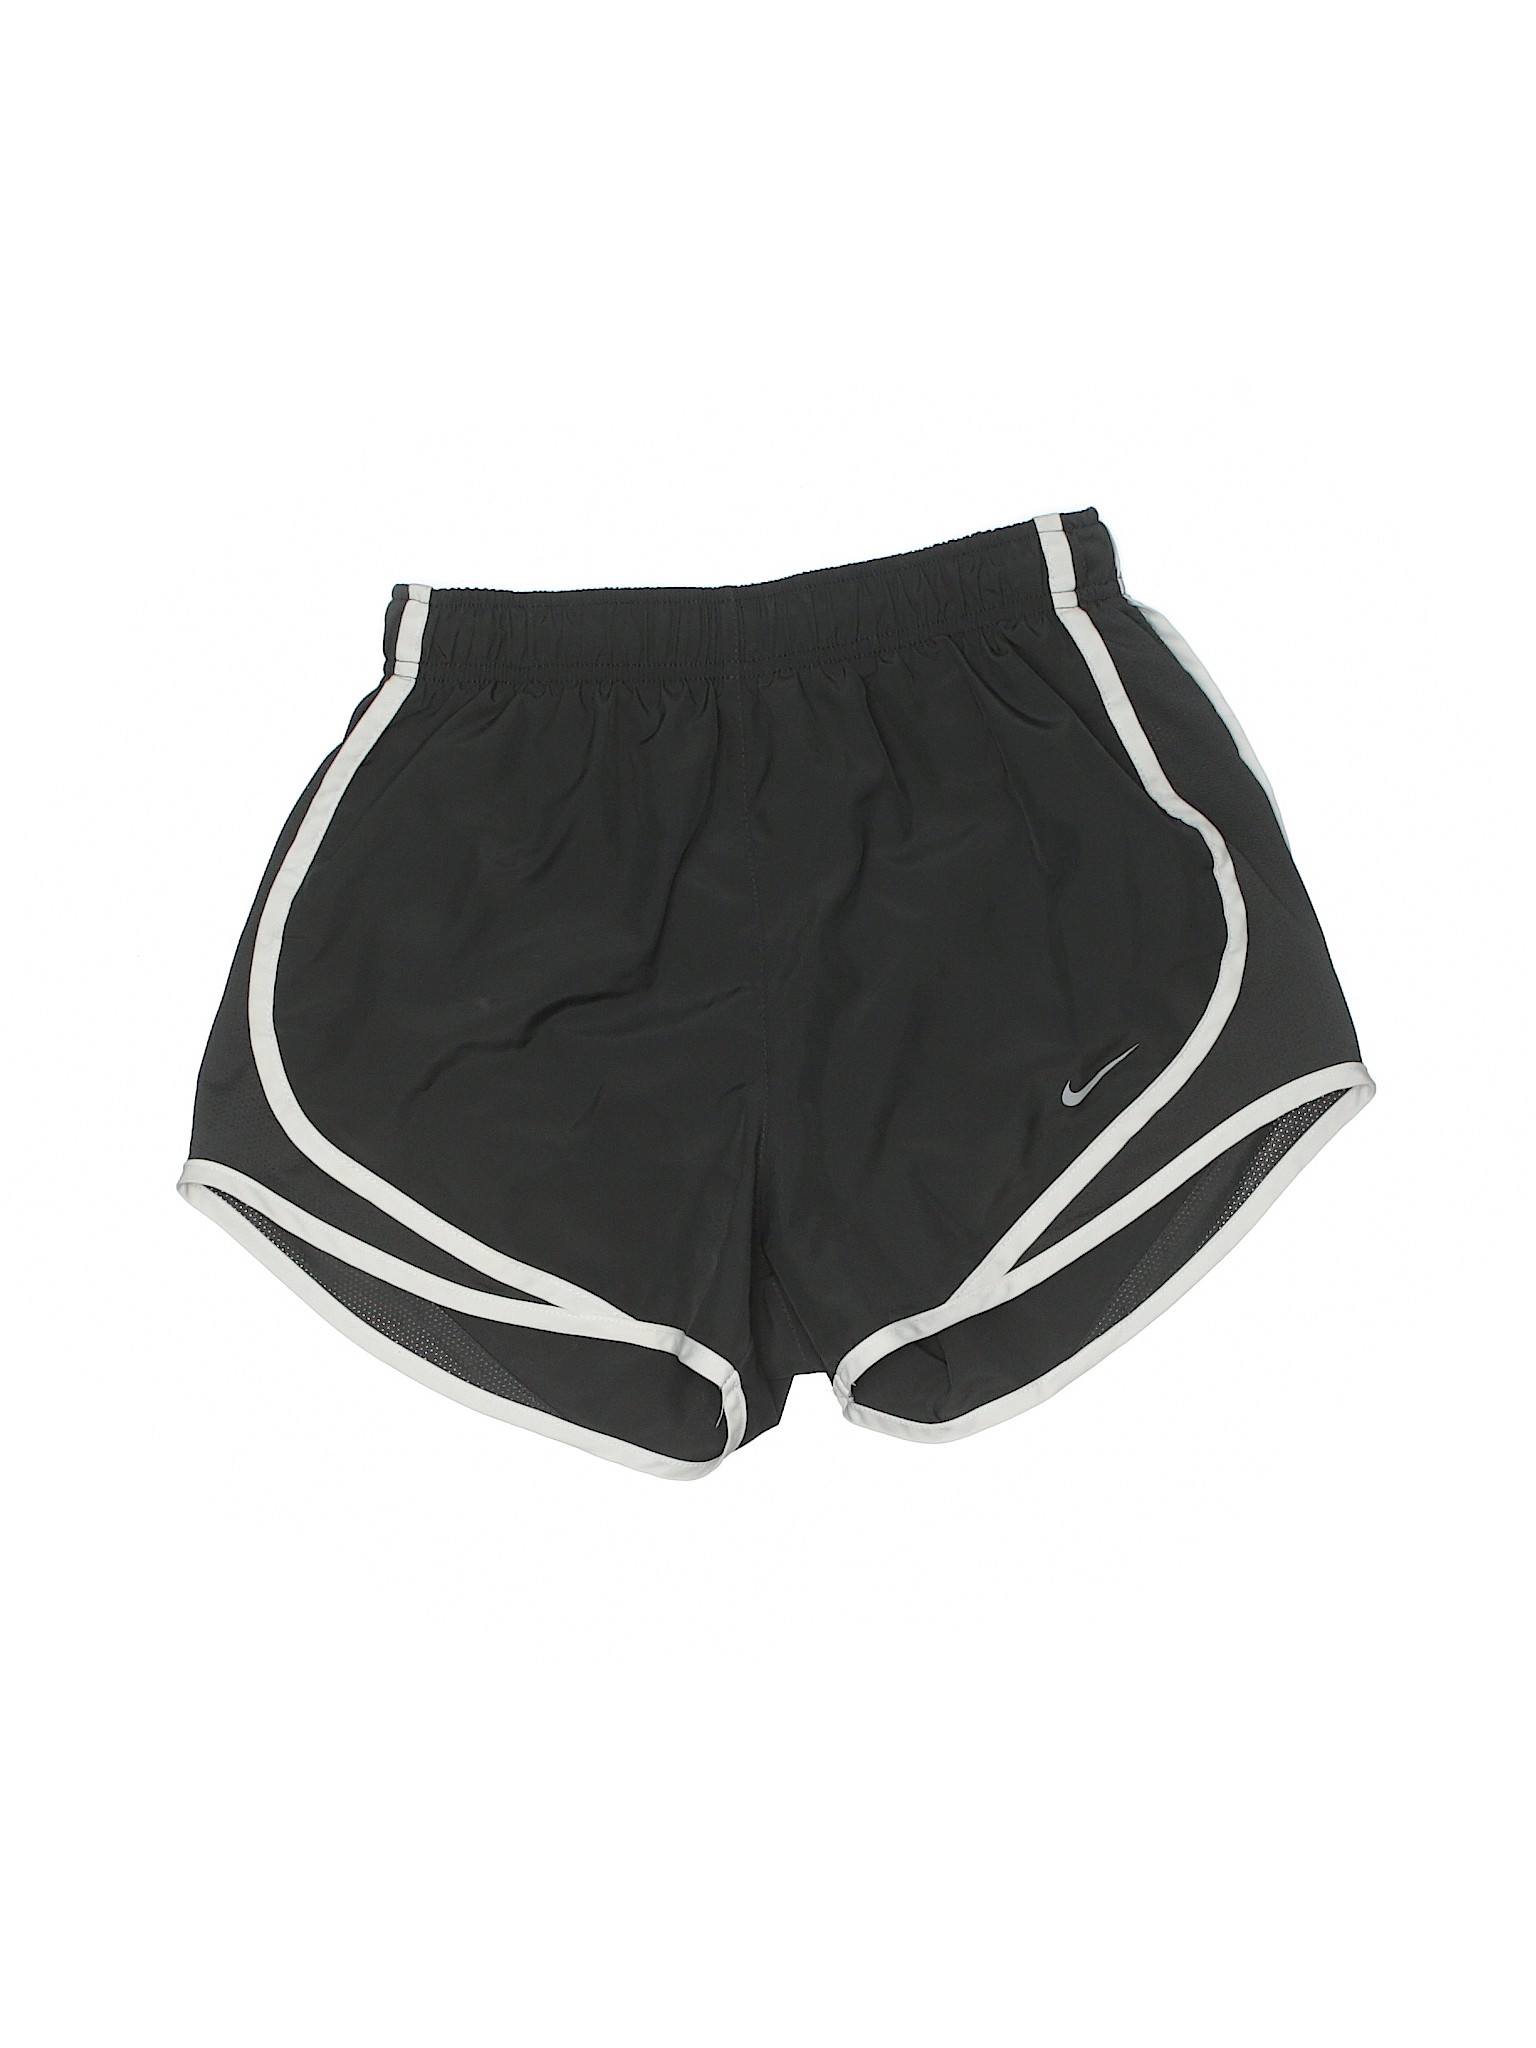 Nike Women Black Athletic Shorts XS | eBay